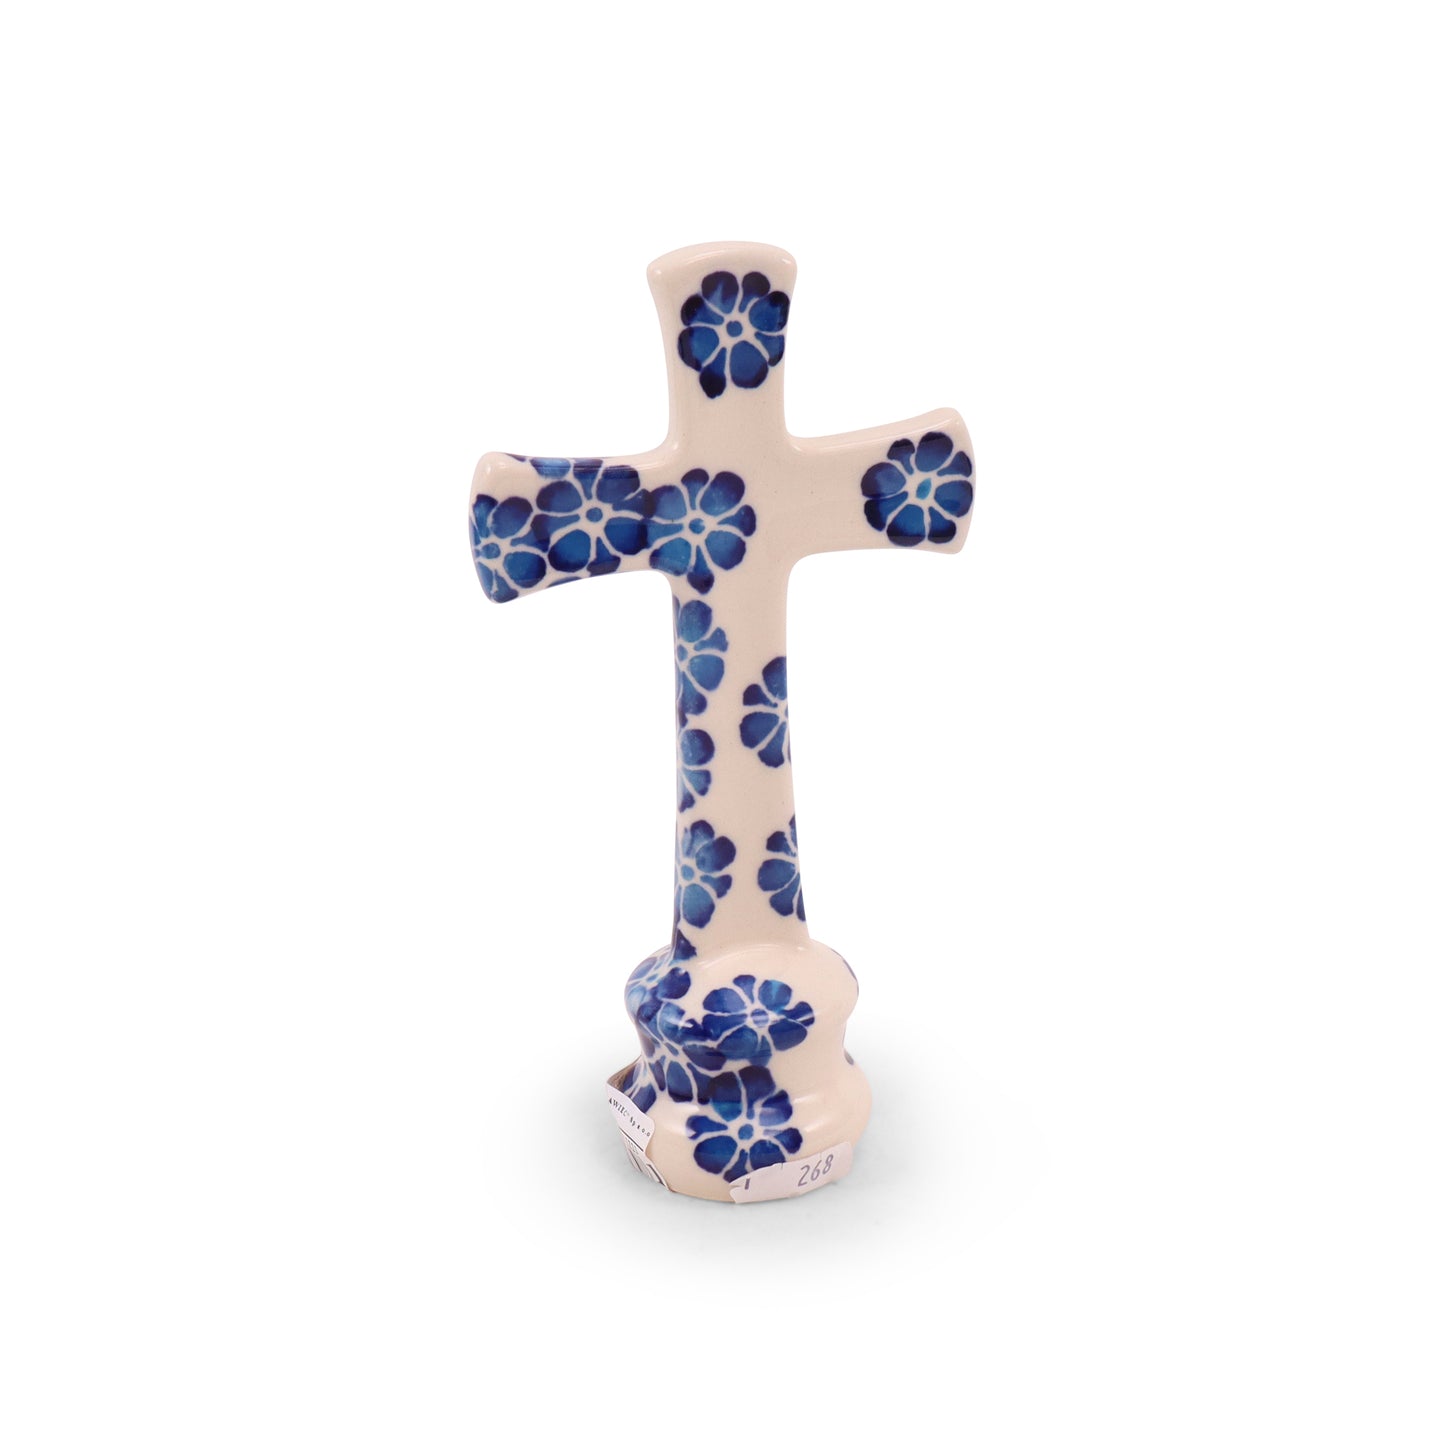 4"x7" Cross Figurine. Pattern: Sweet Petunia